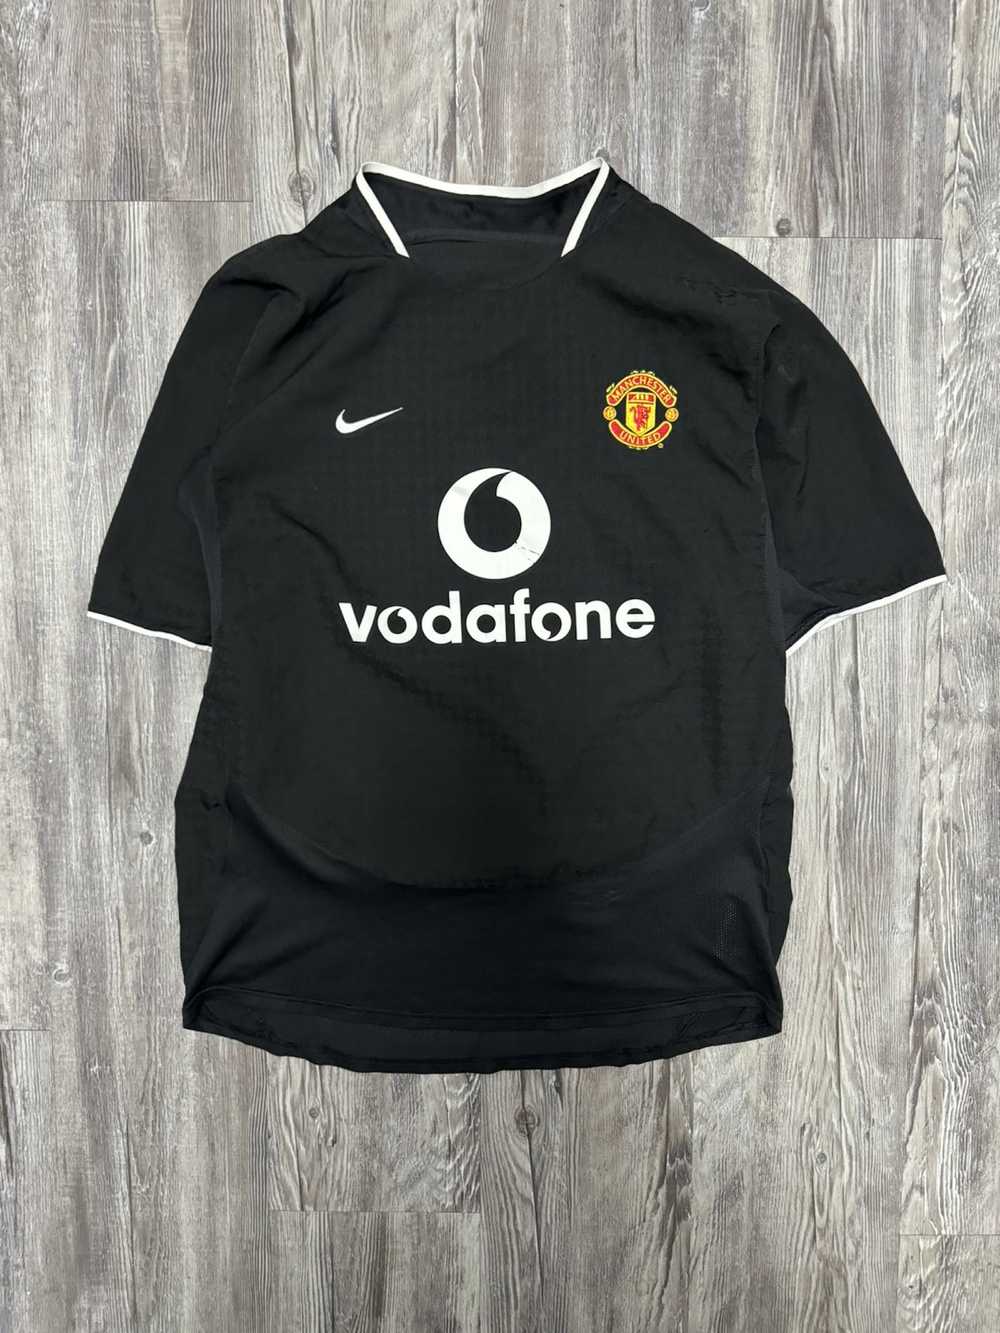 Nike × Vintage Manchester United 2003 Jersey - image 1